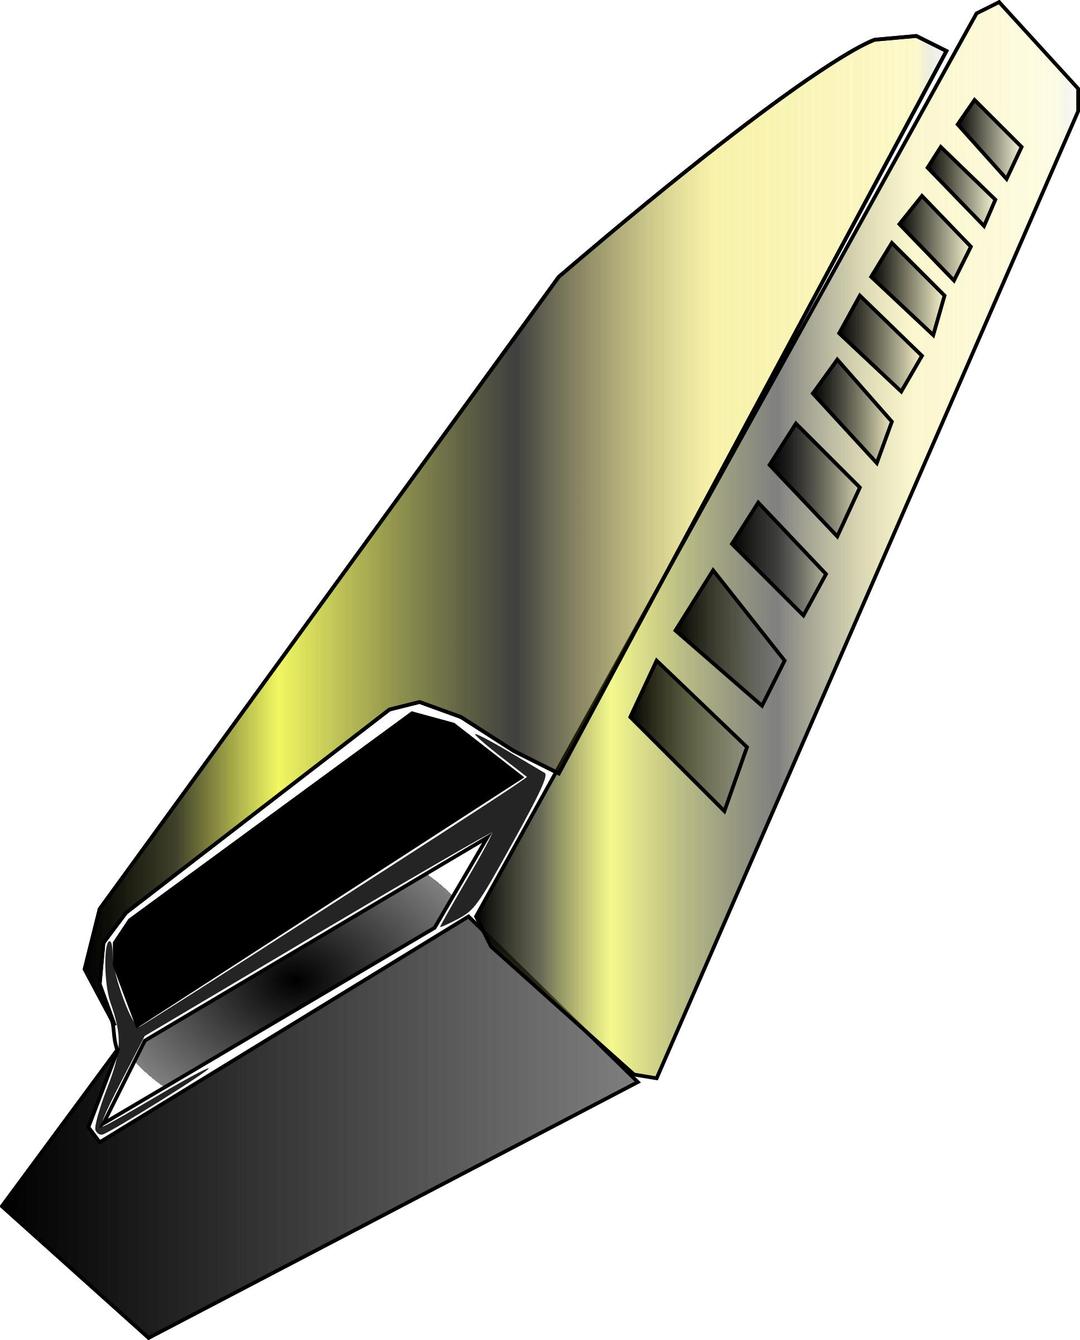 harmonica png transparent